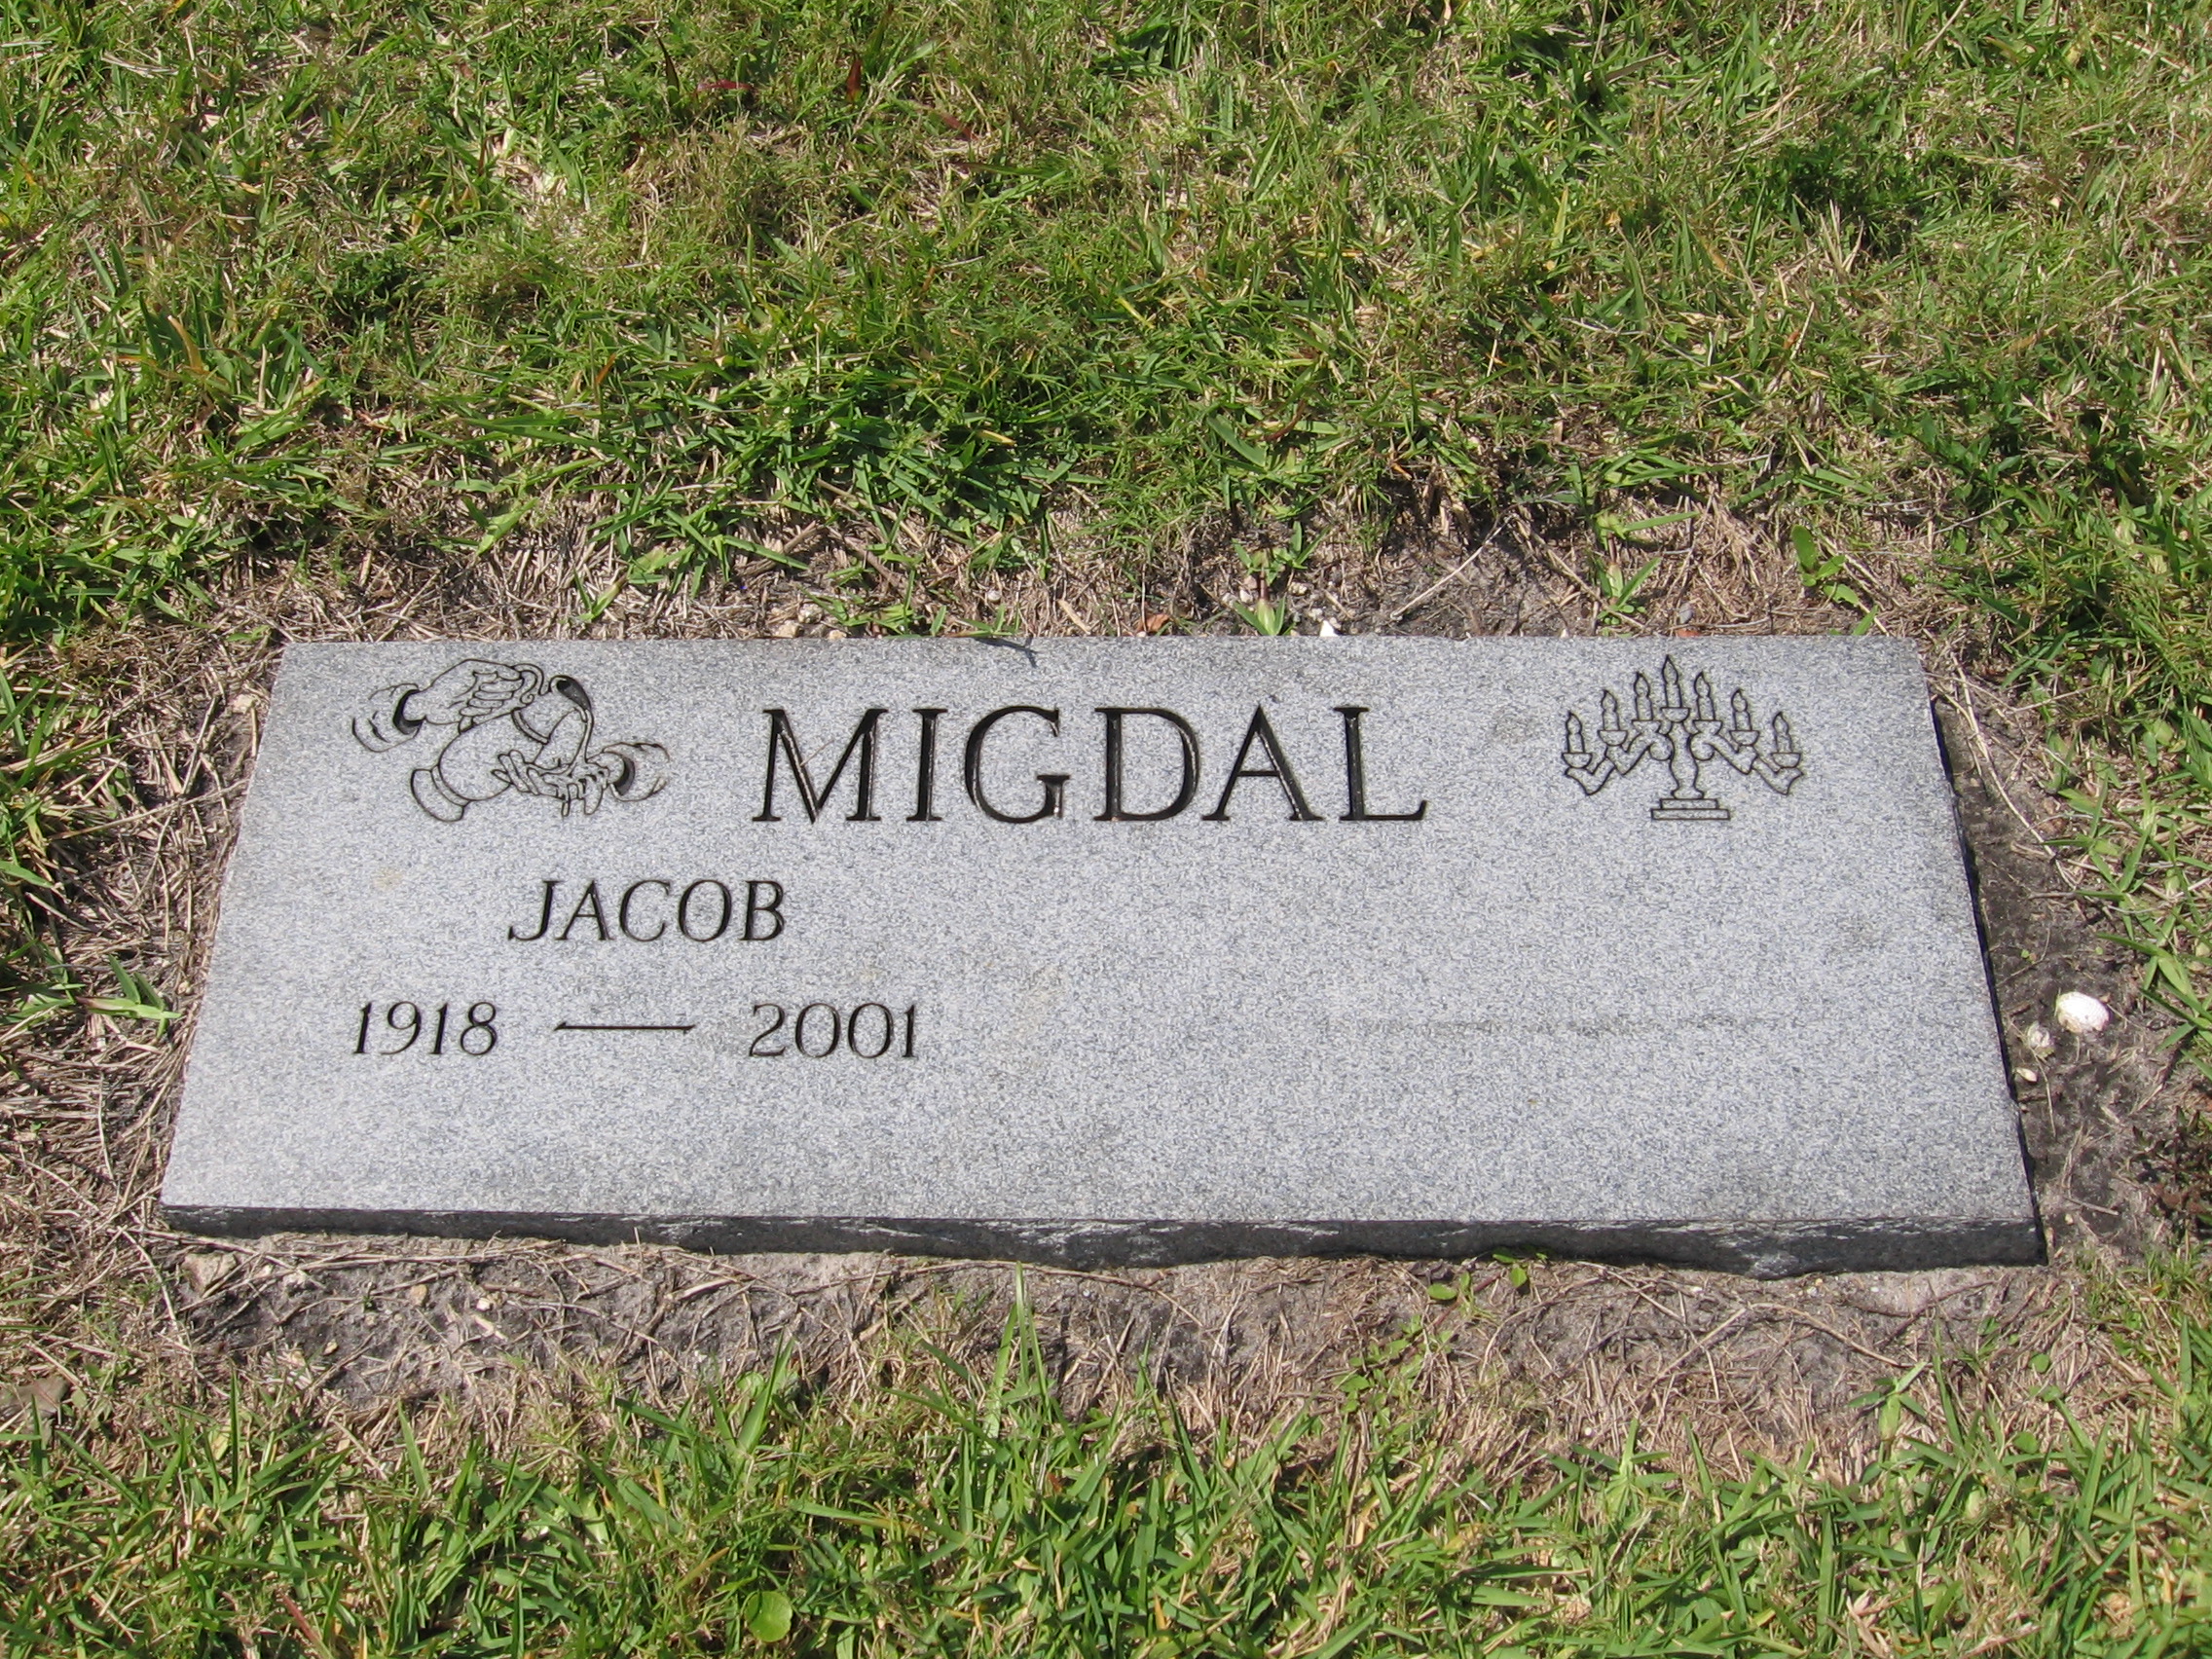 Jacob Migdal